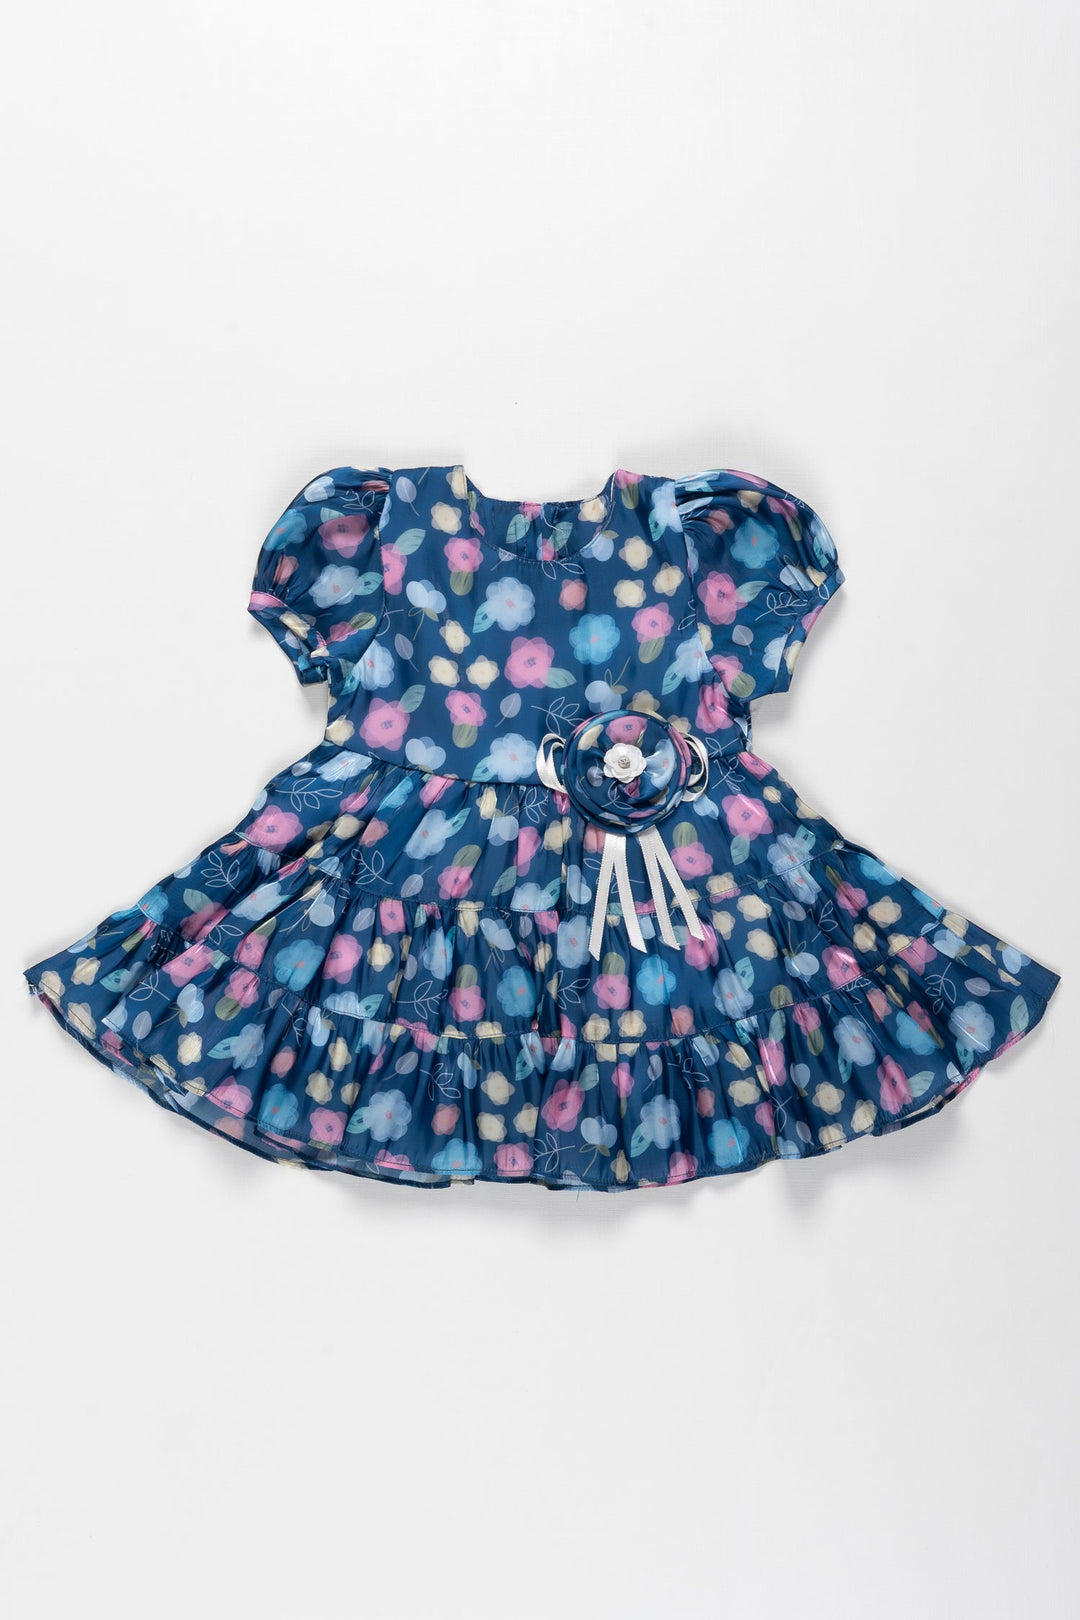 The Nesavu Baby Fancy Frock Enchanted Garden Organza Dress for Baby Girls Nesavu 14 (6M) / Blue / Organza BFJ524A-14 Floral Organza Baby Girl Dress with Ruffles | Perfect Party Wear | The Nesavu